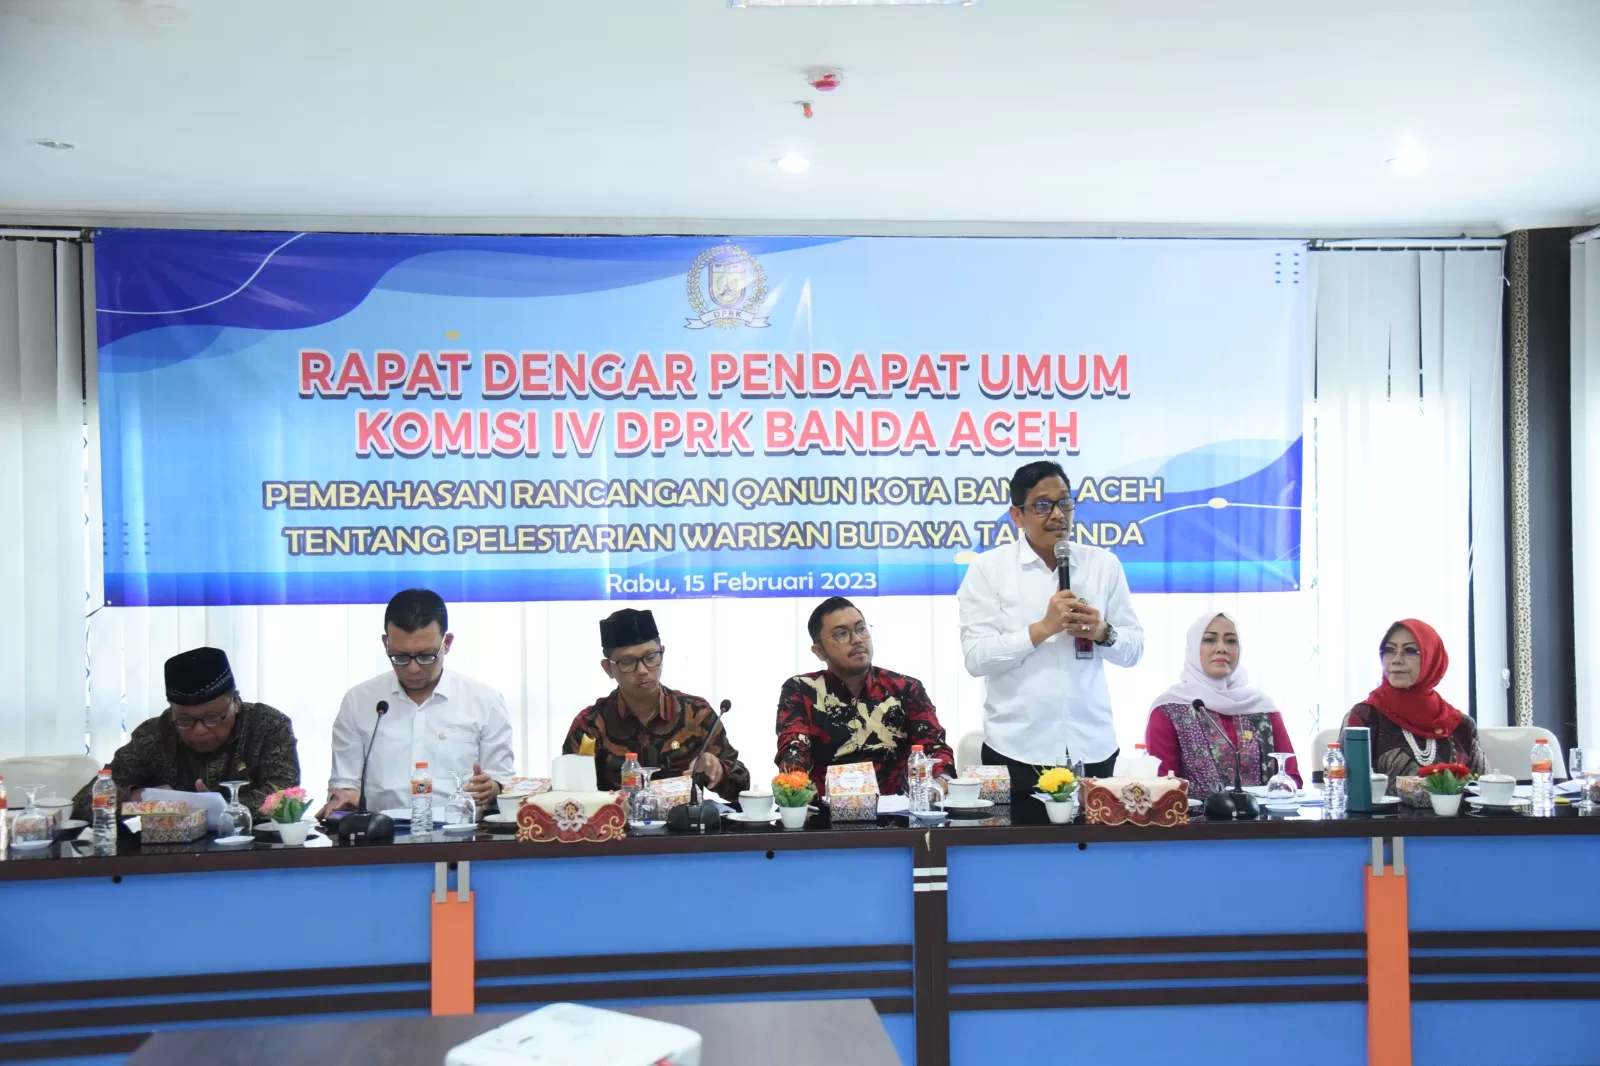 Rapat Dengar Pendapat Umum (RDPU), DPRK Banda Aceh tentang Rancangan Qanun Warisan Budaya Takbenda Tahun 2023. di lantai IV gedung DPRK Banda Aceh